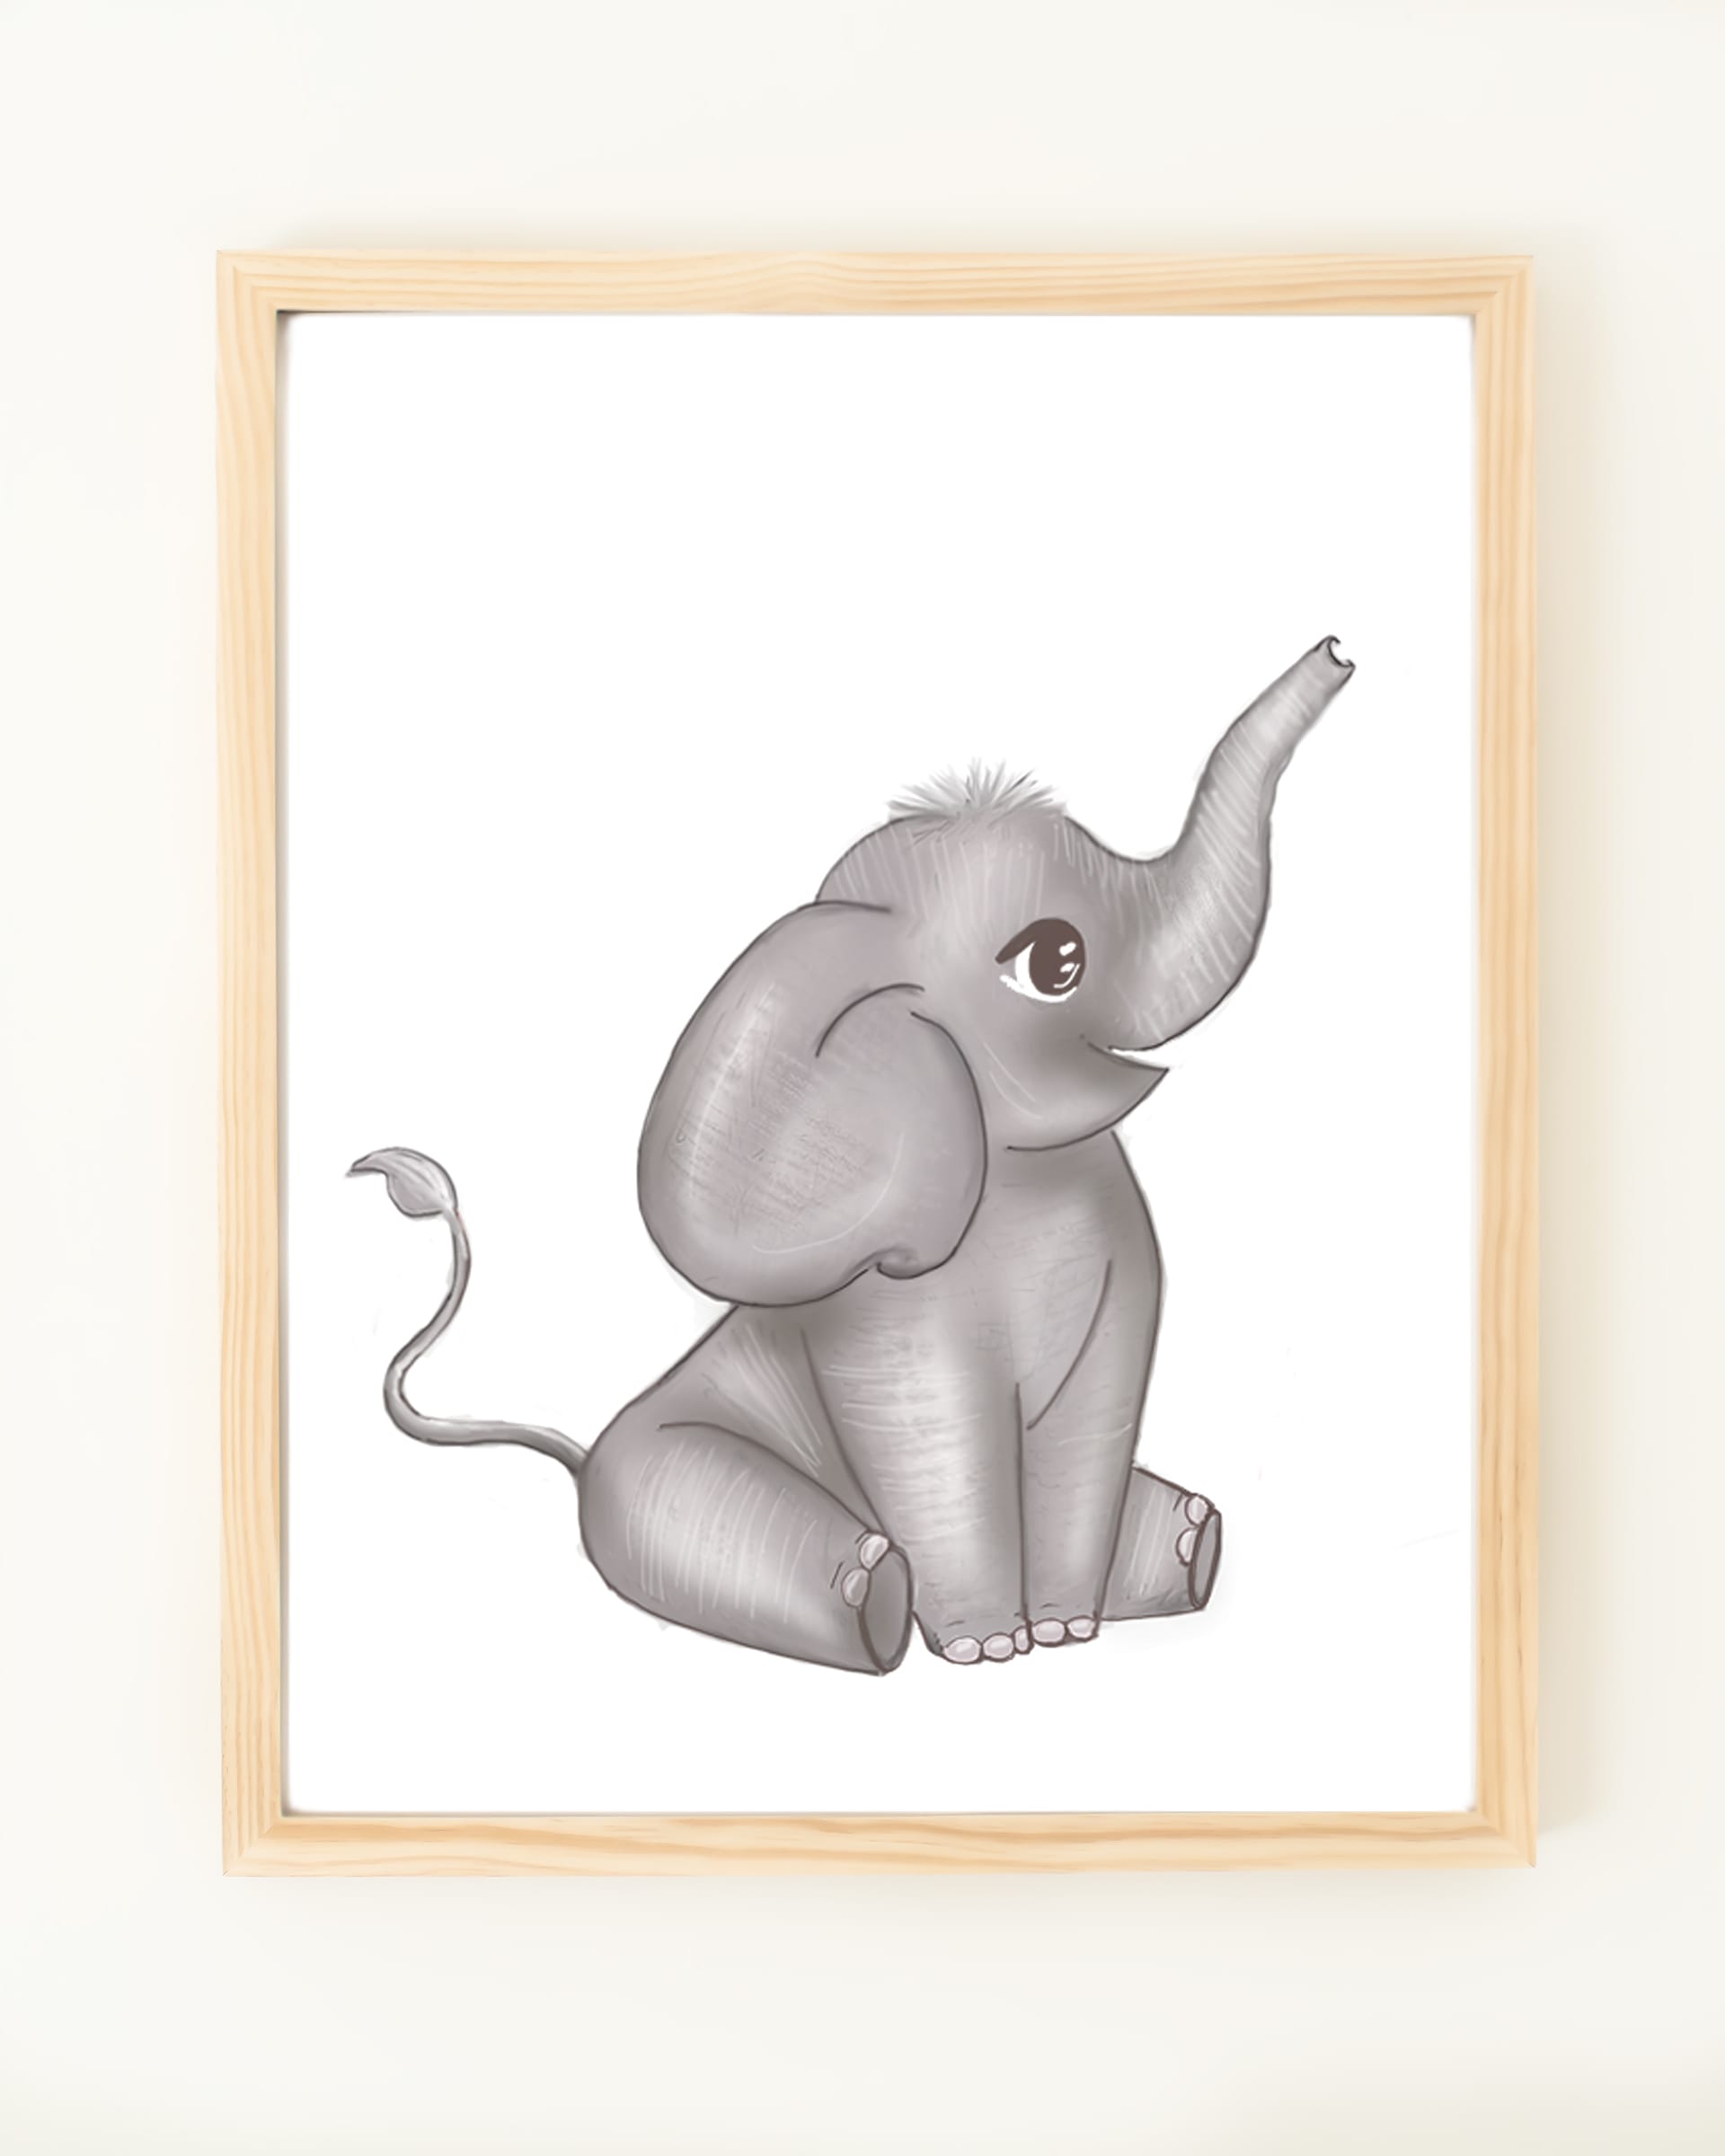 Framed hand drawn safari nursery decor wall art poster cute elephant baby animal 